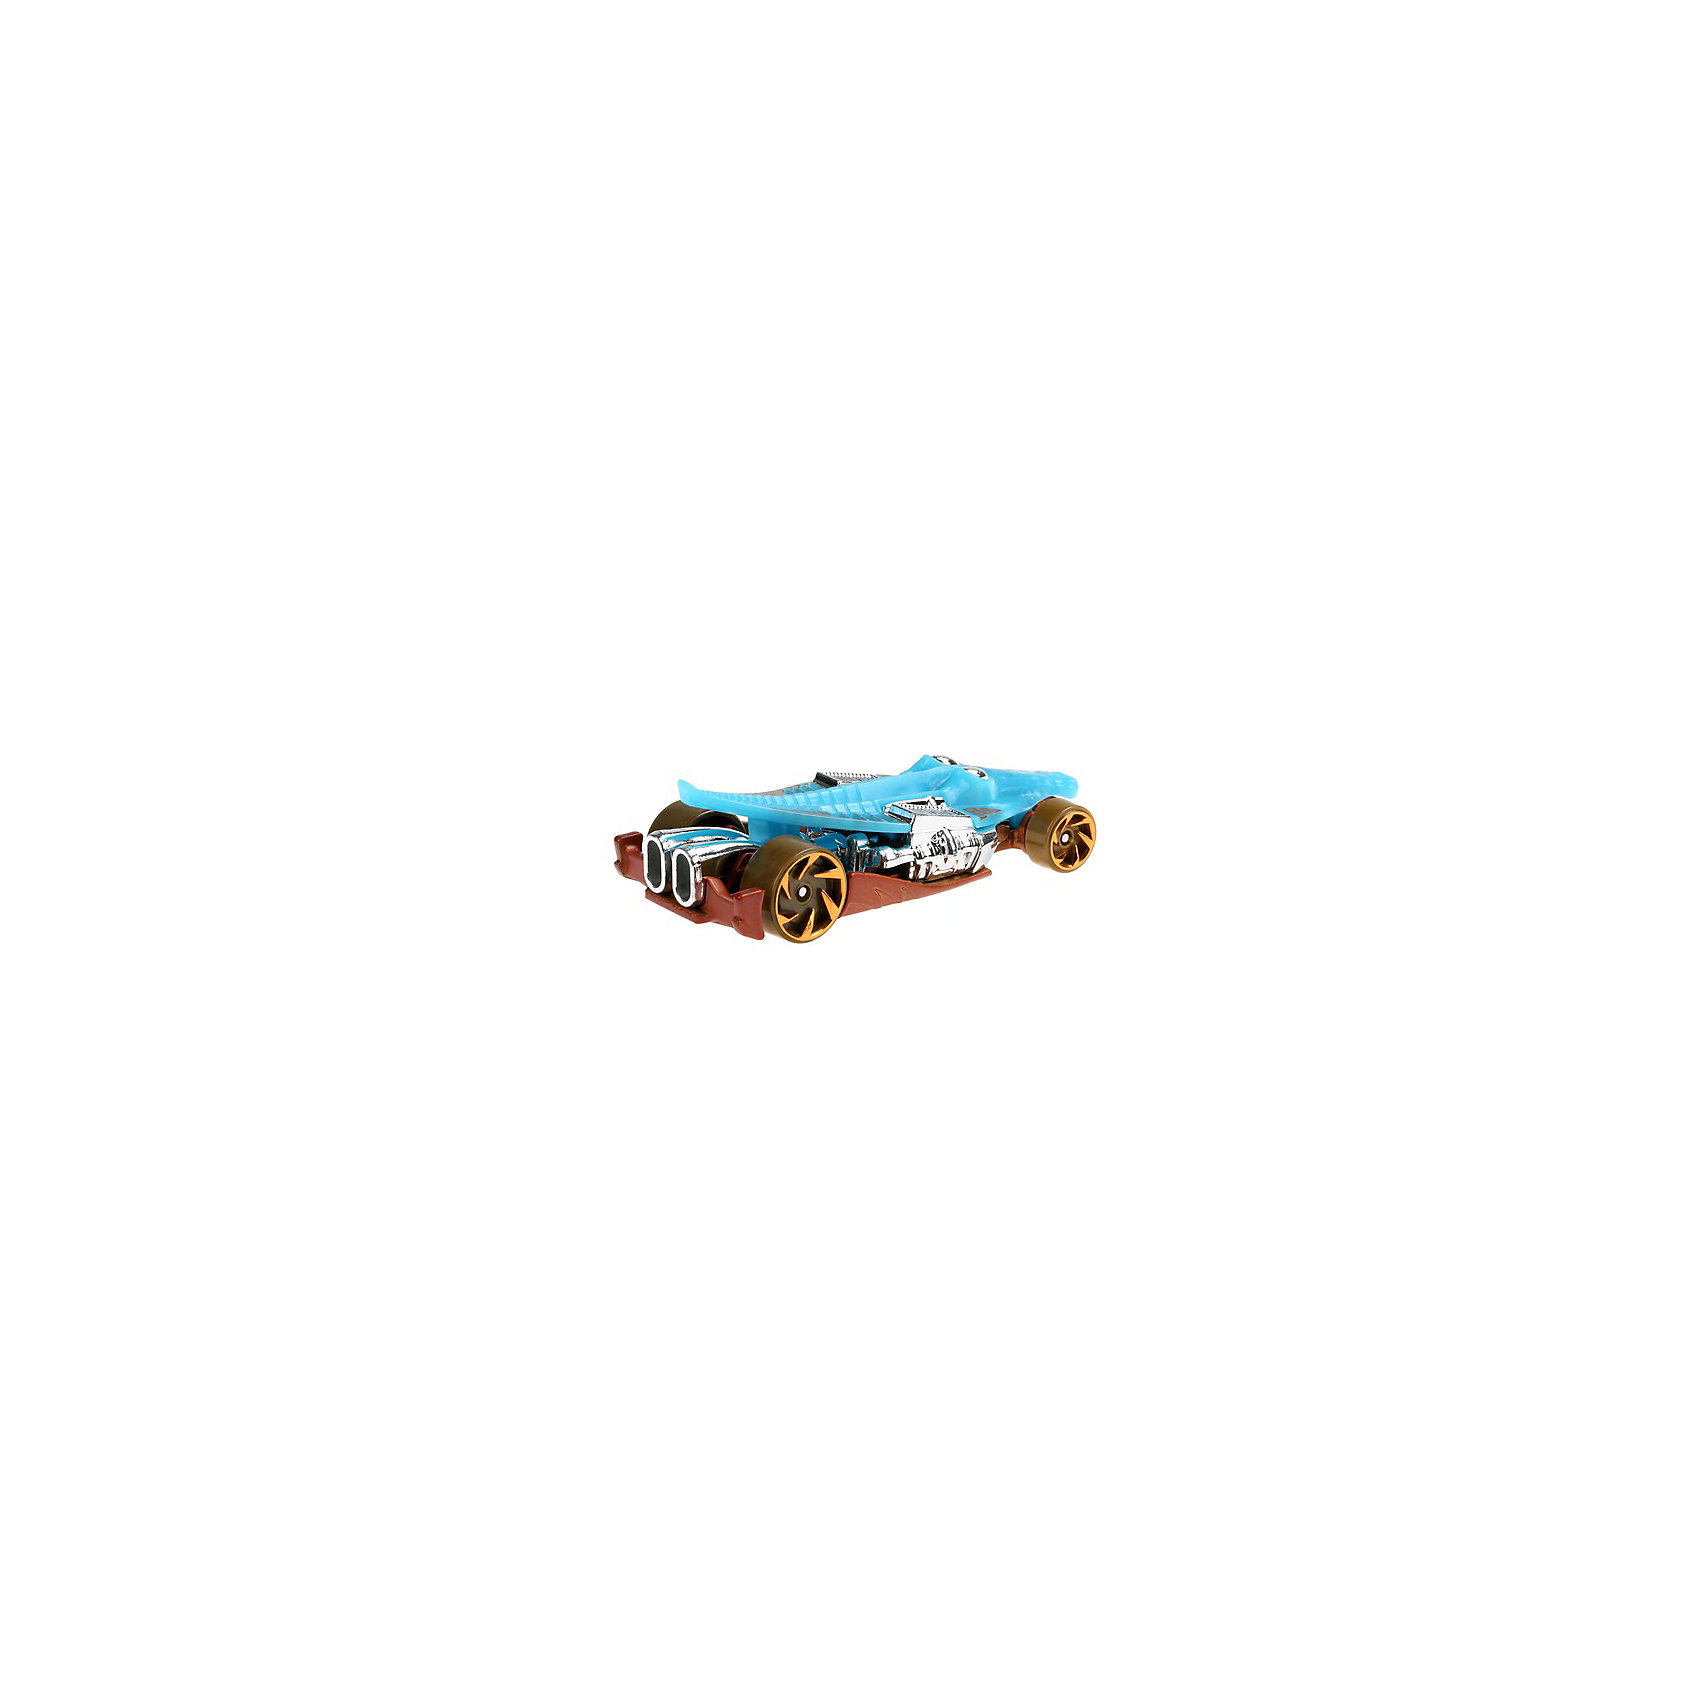 Базовая машинка Hot Wheels Croc Rod Mattel 17494401